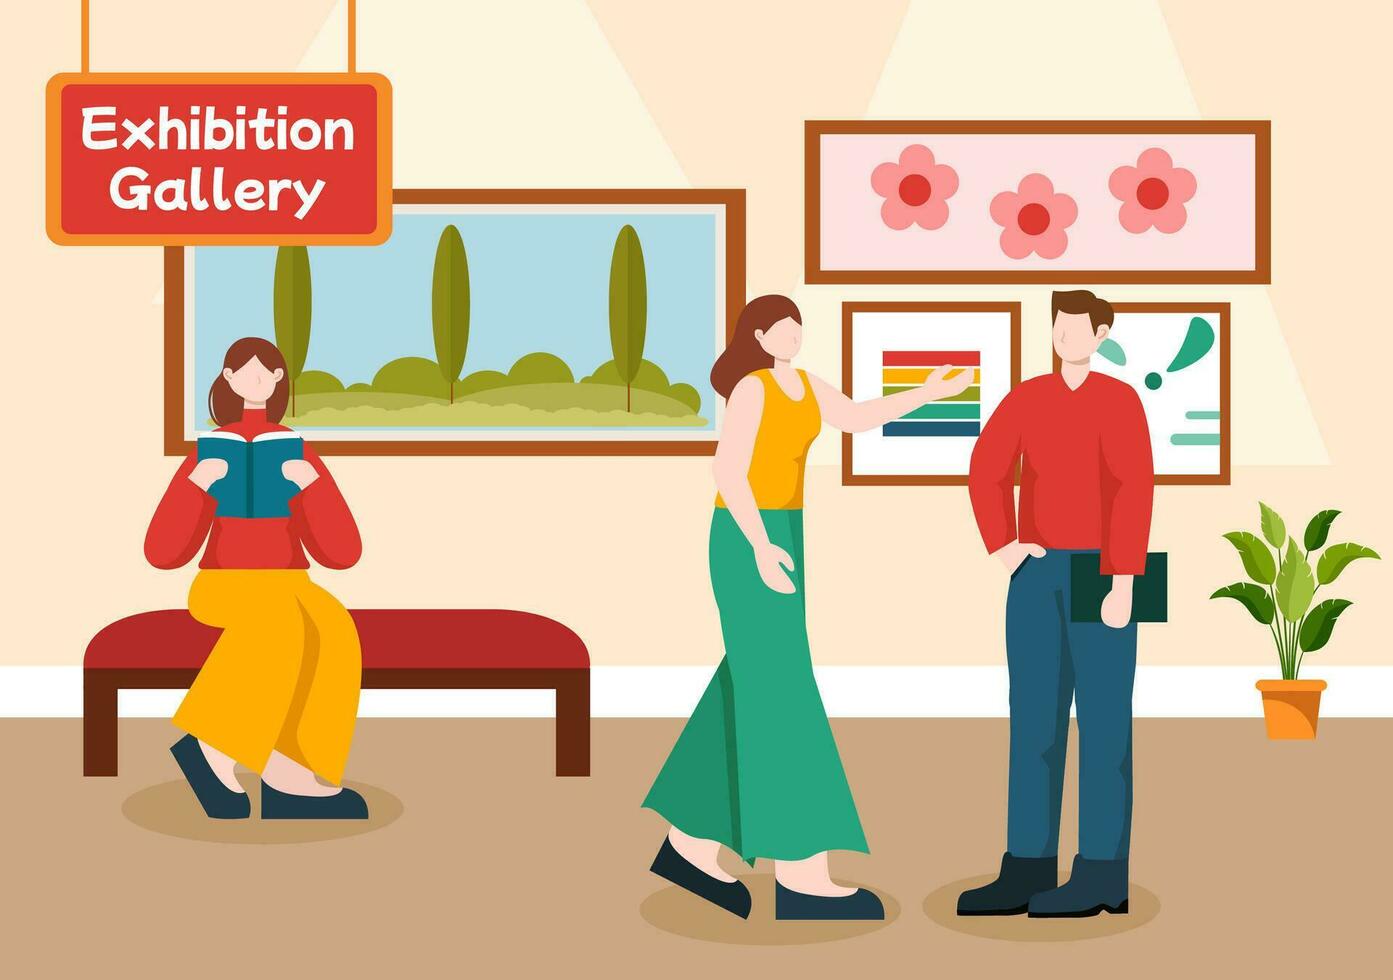 exposición visitantes visita un galería con moderno resumen pintura a contemporáneo en exposición salón en plano dibujos animados antecedentes vector ilustración